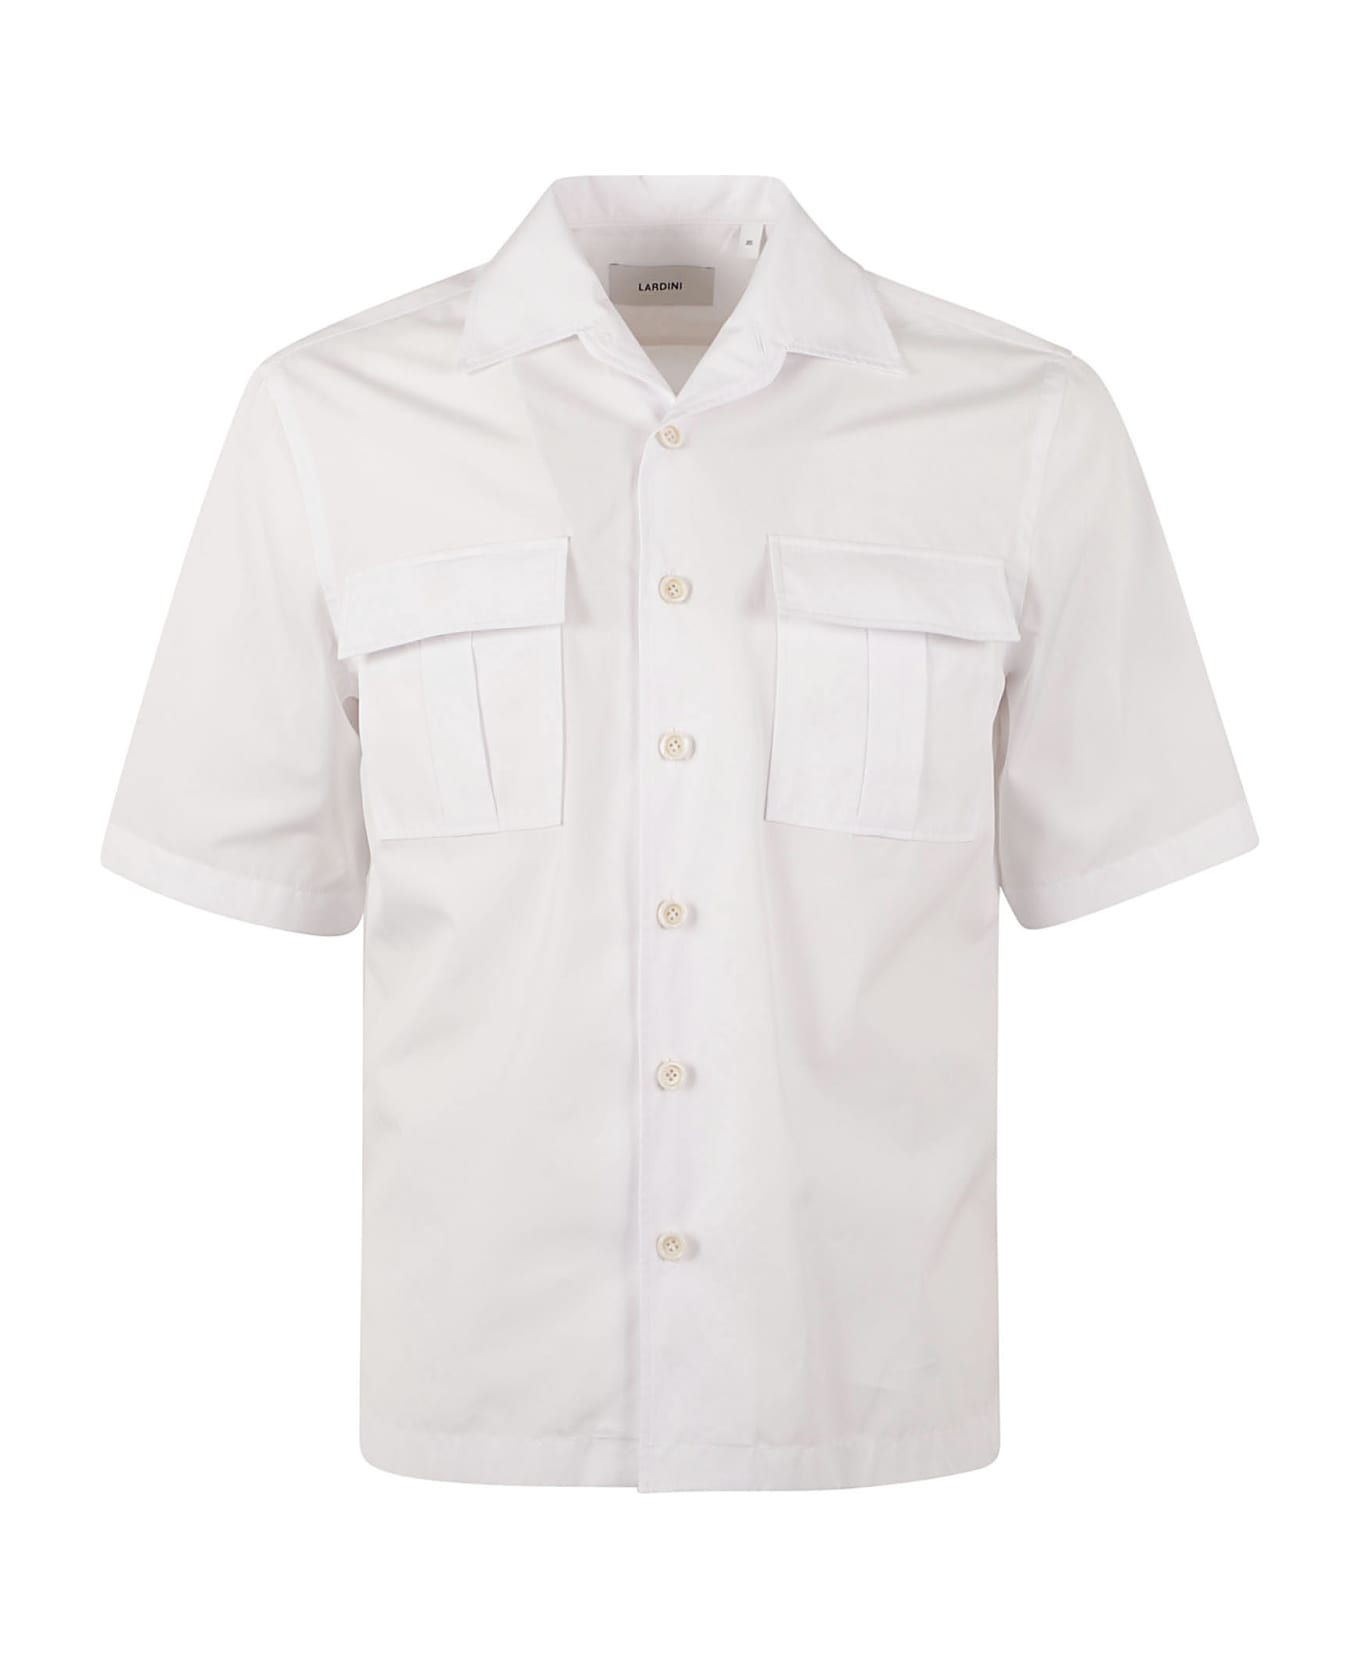 Lardini Pocket Shirt - White